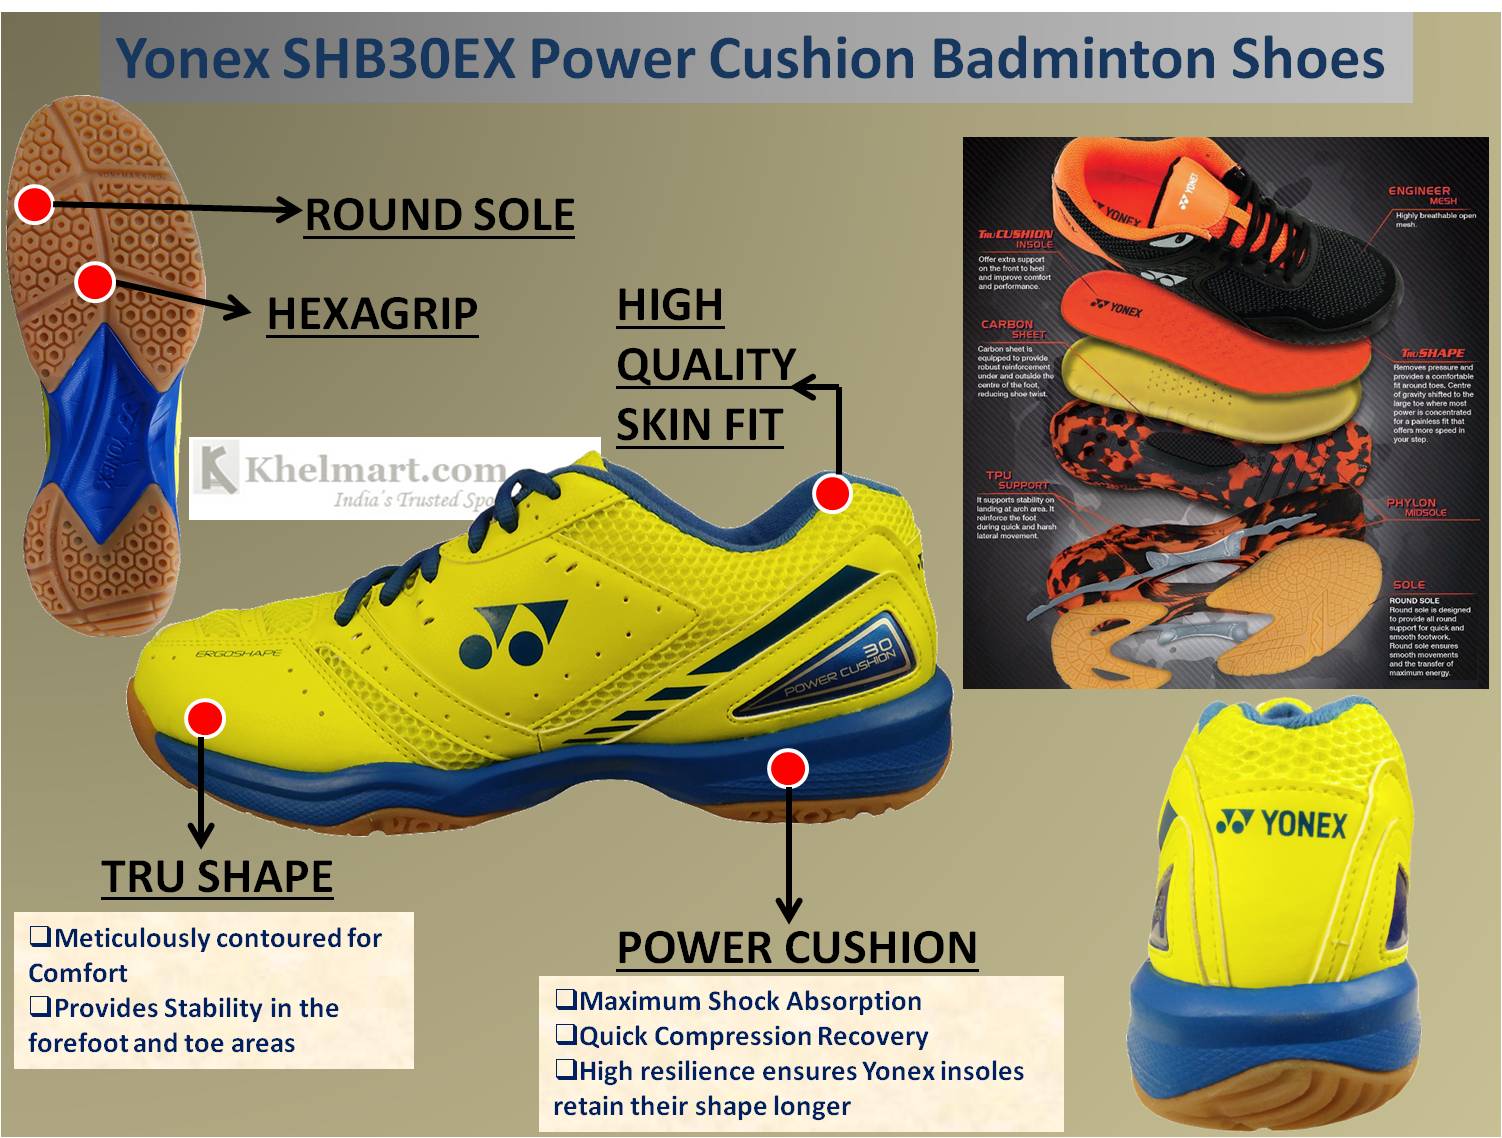 Yonex_SHB30EX_Power_Cushion_Badminton_Shoes_YELLOW_and_BLUE.jpg